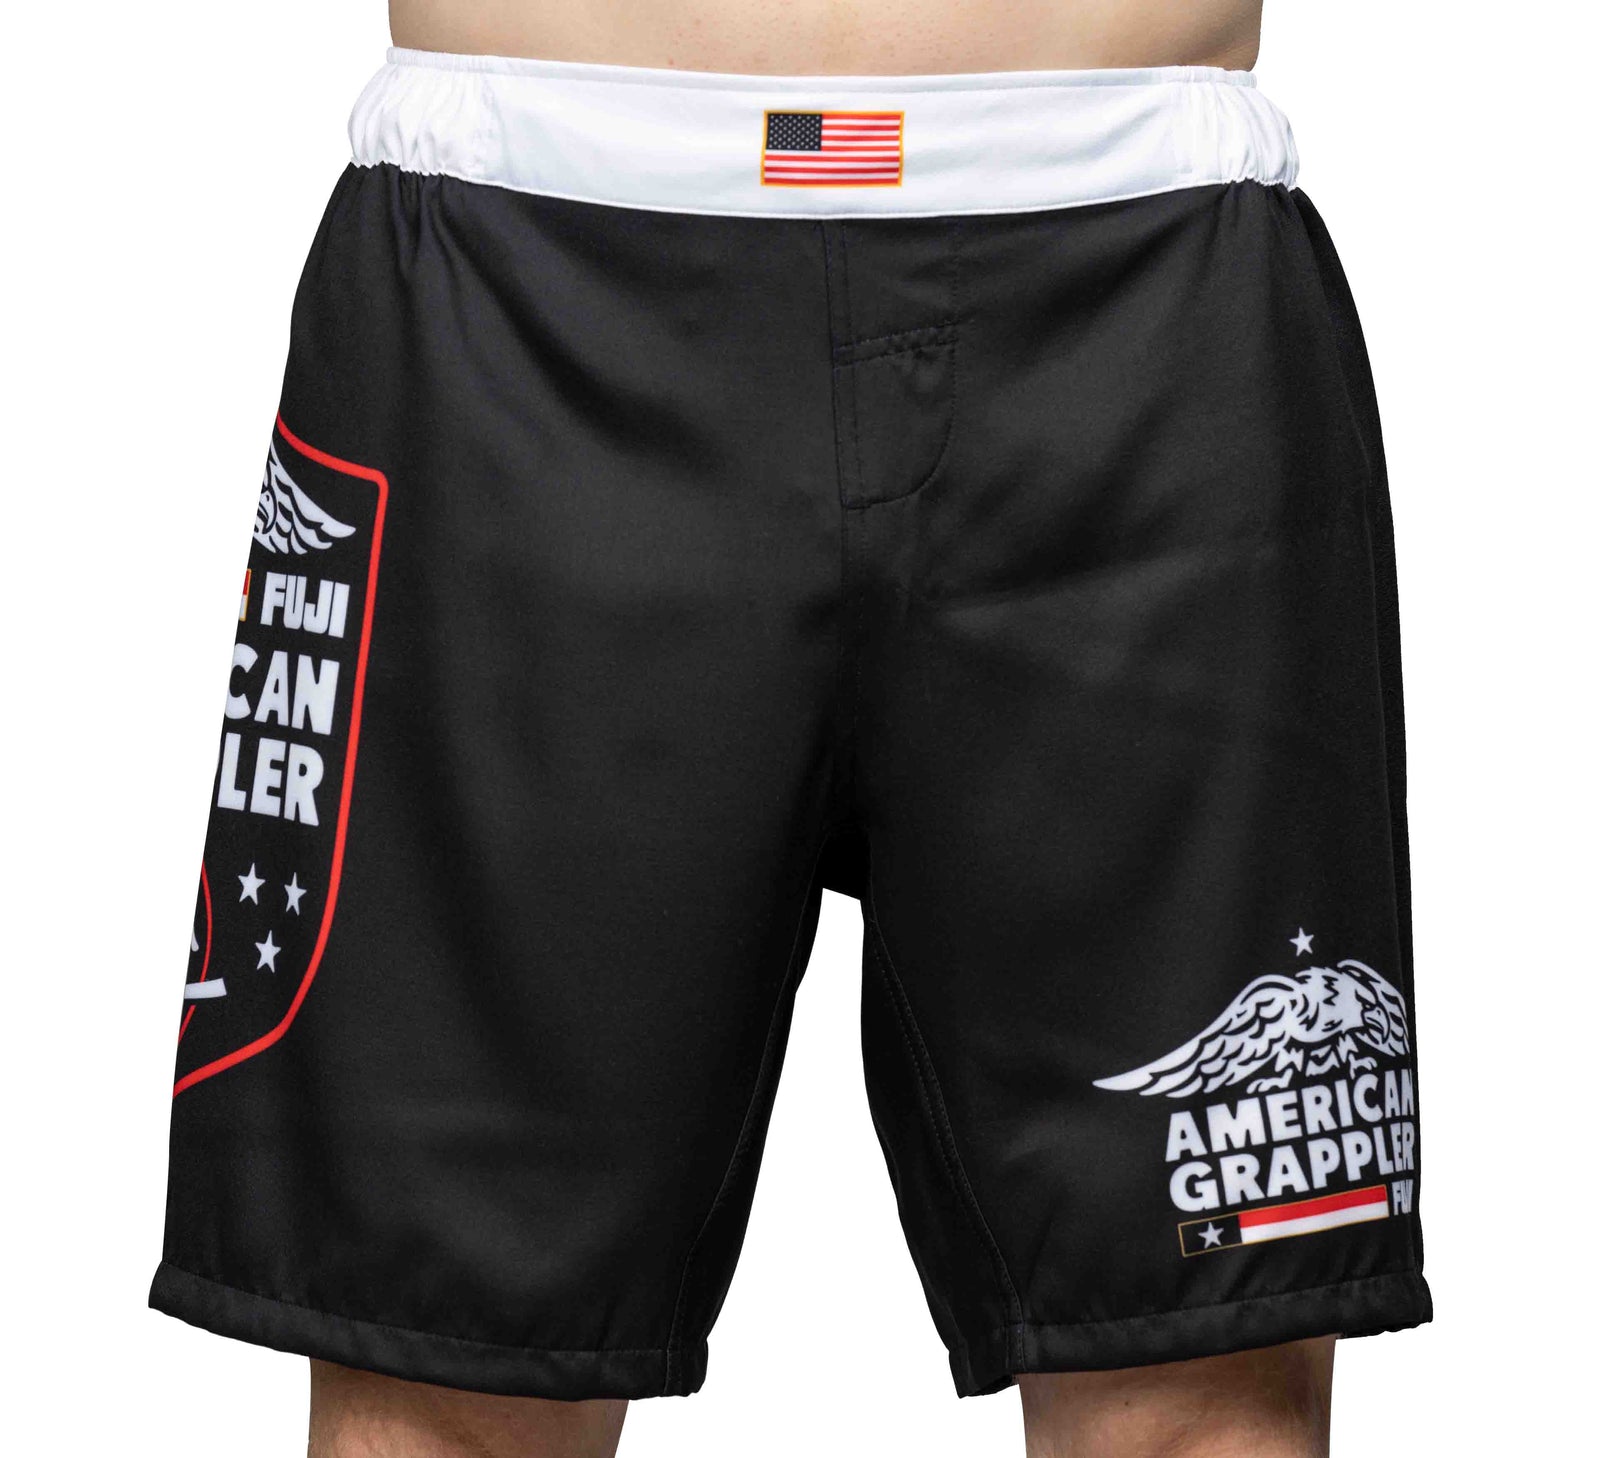 American Grappler Shorts Black